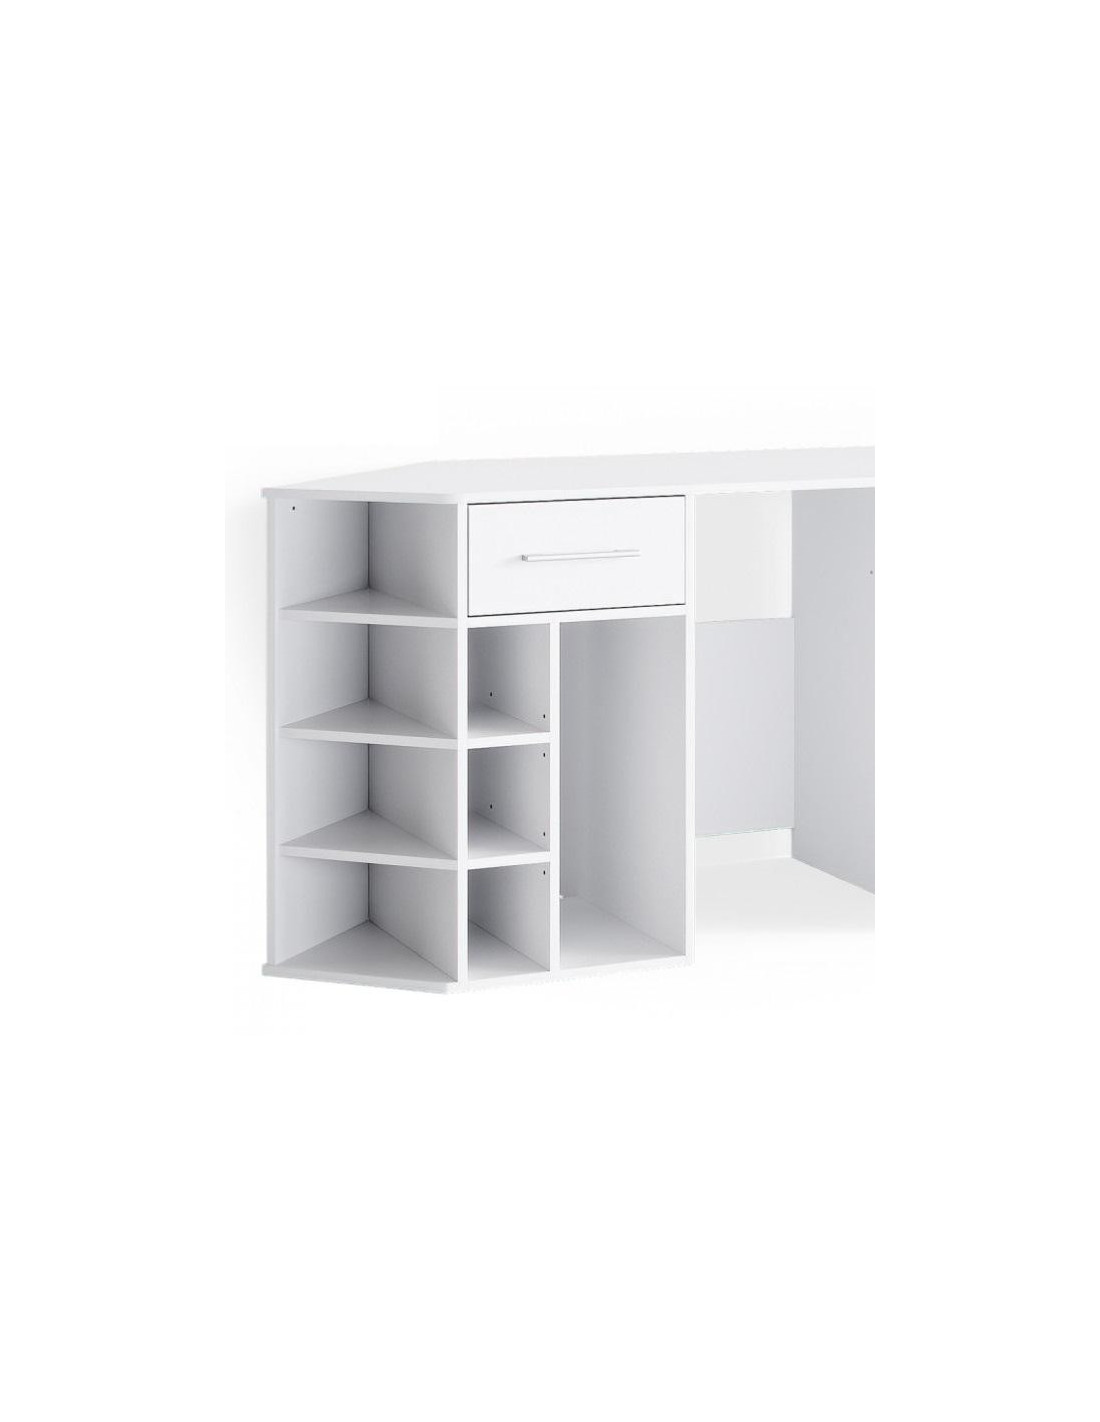 Grand bureau spacieux blanc placard et tiroir rangement - Ciel & terre